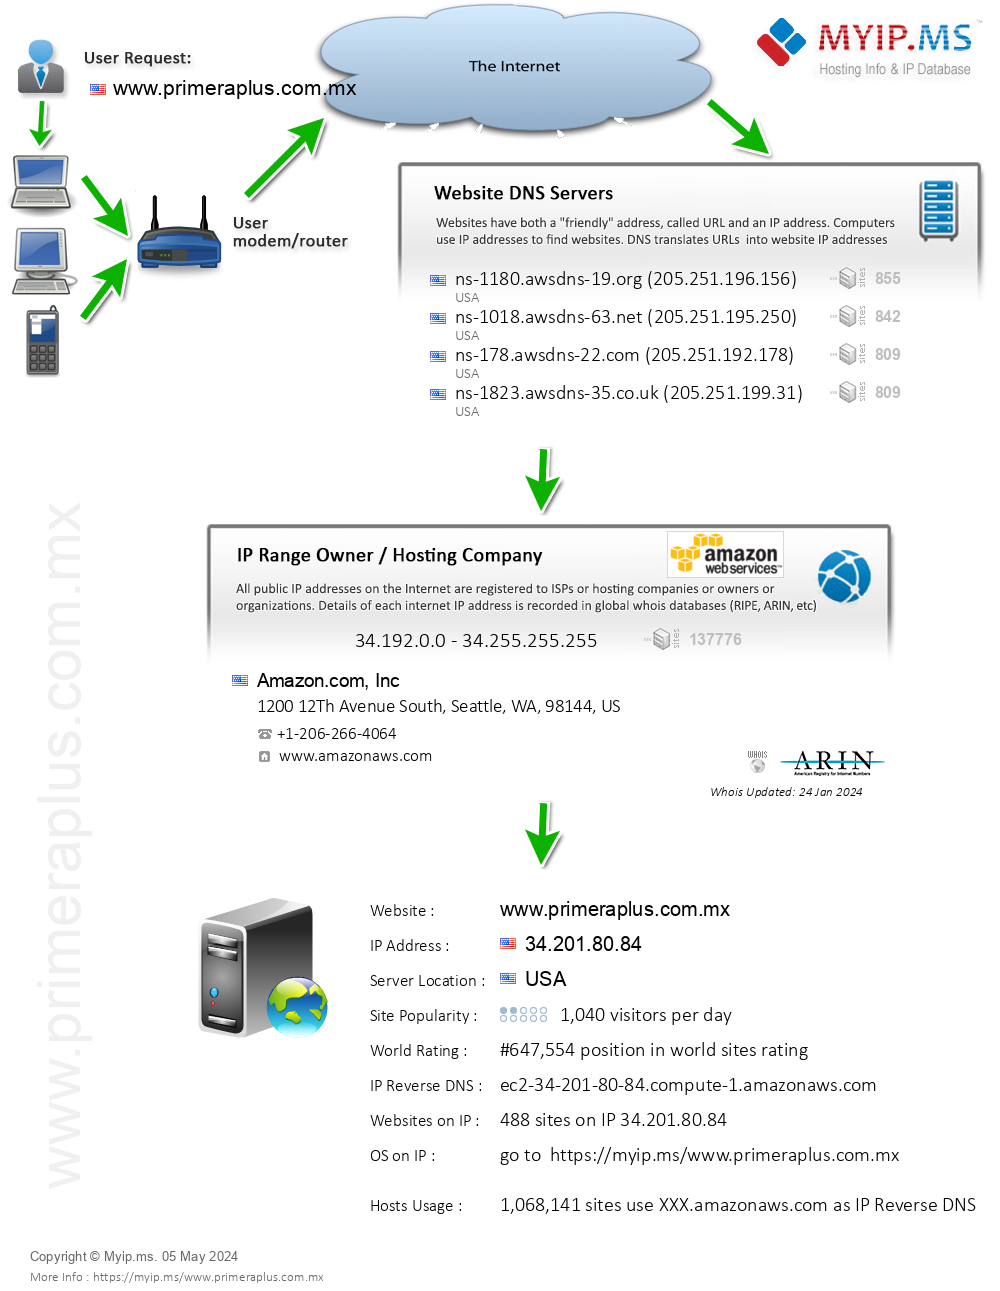 Primeraplus.com.mx - Website Hosting Visual IP Diagram